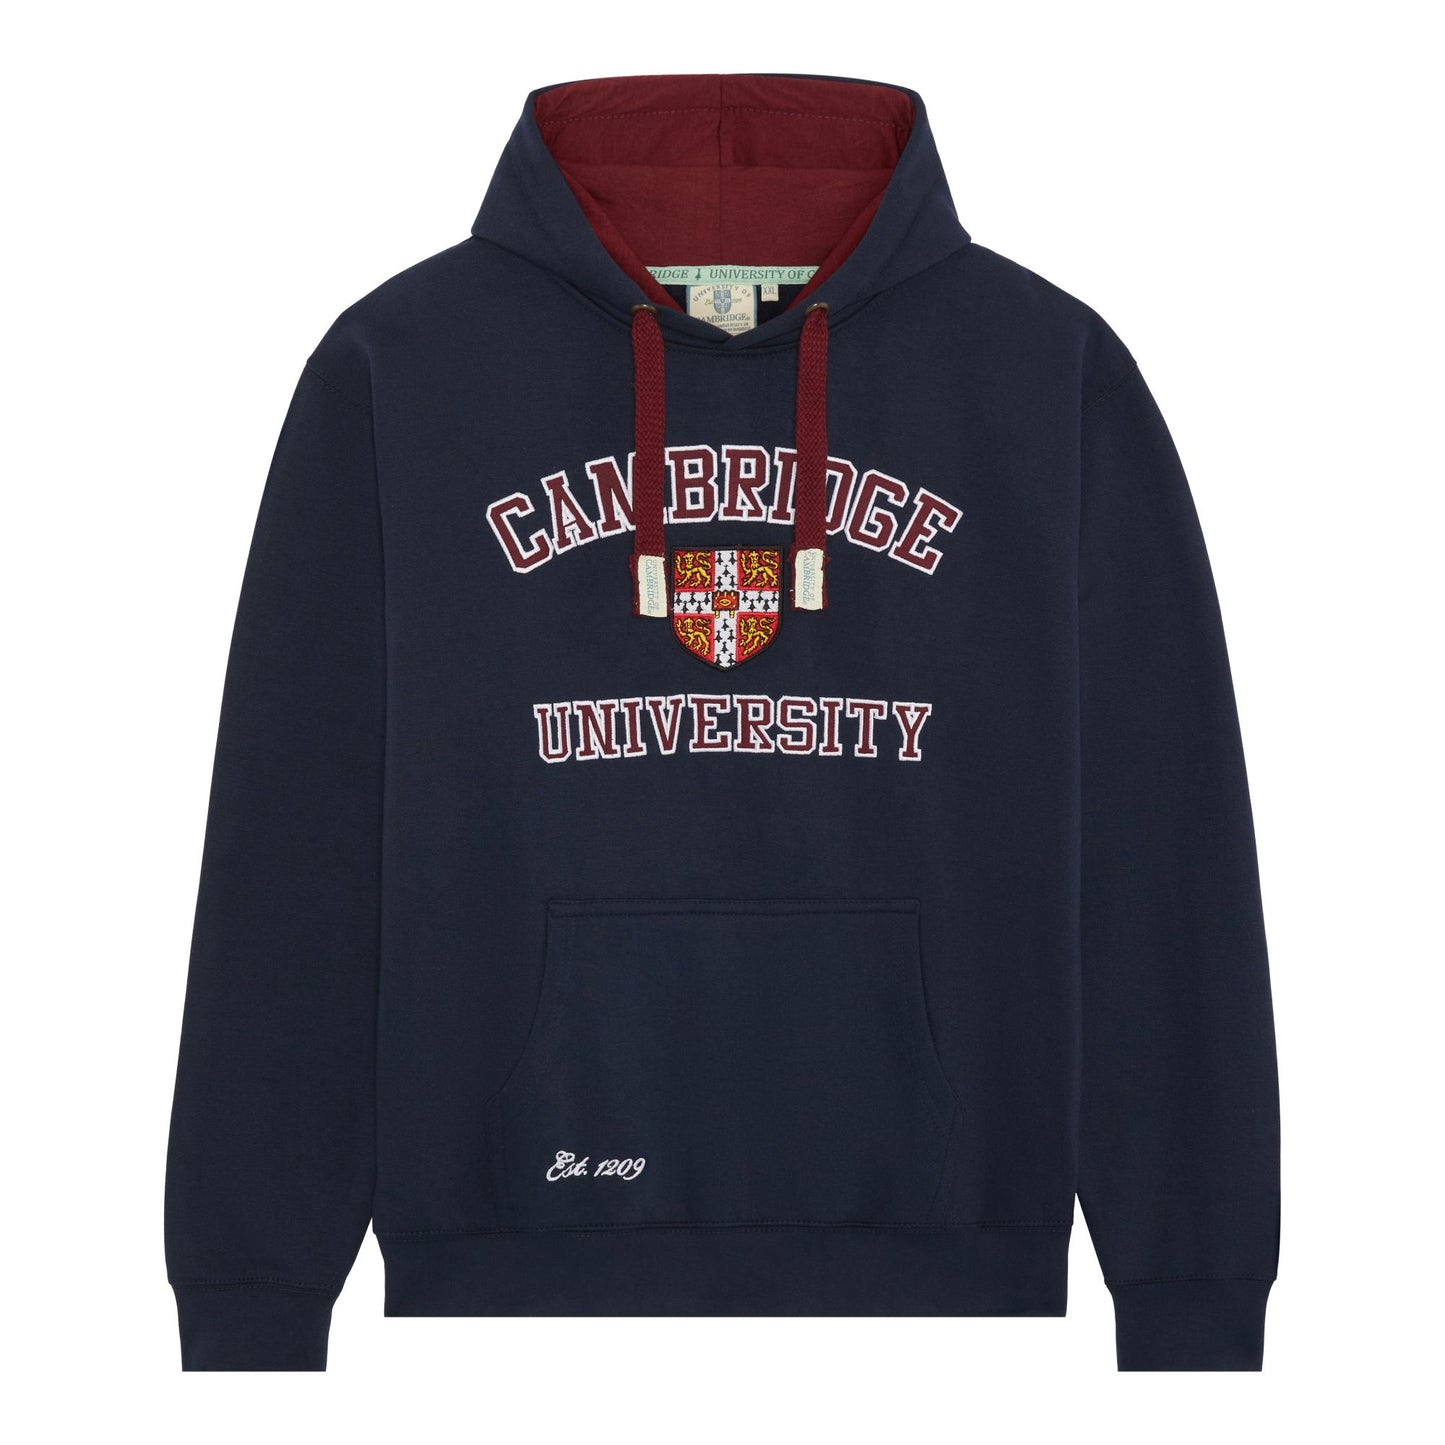 Cambridge University Applique Pullover Hood - Navy/Burgundy